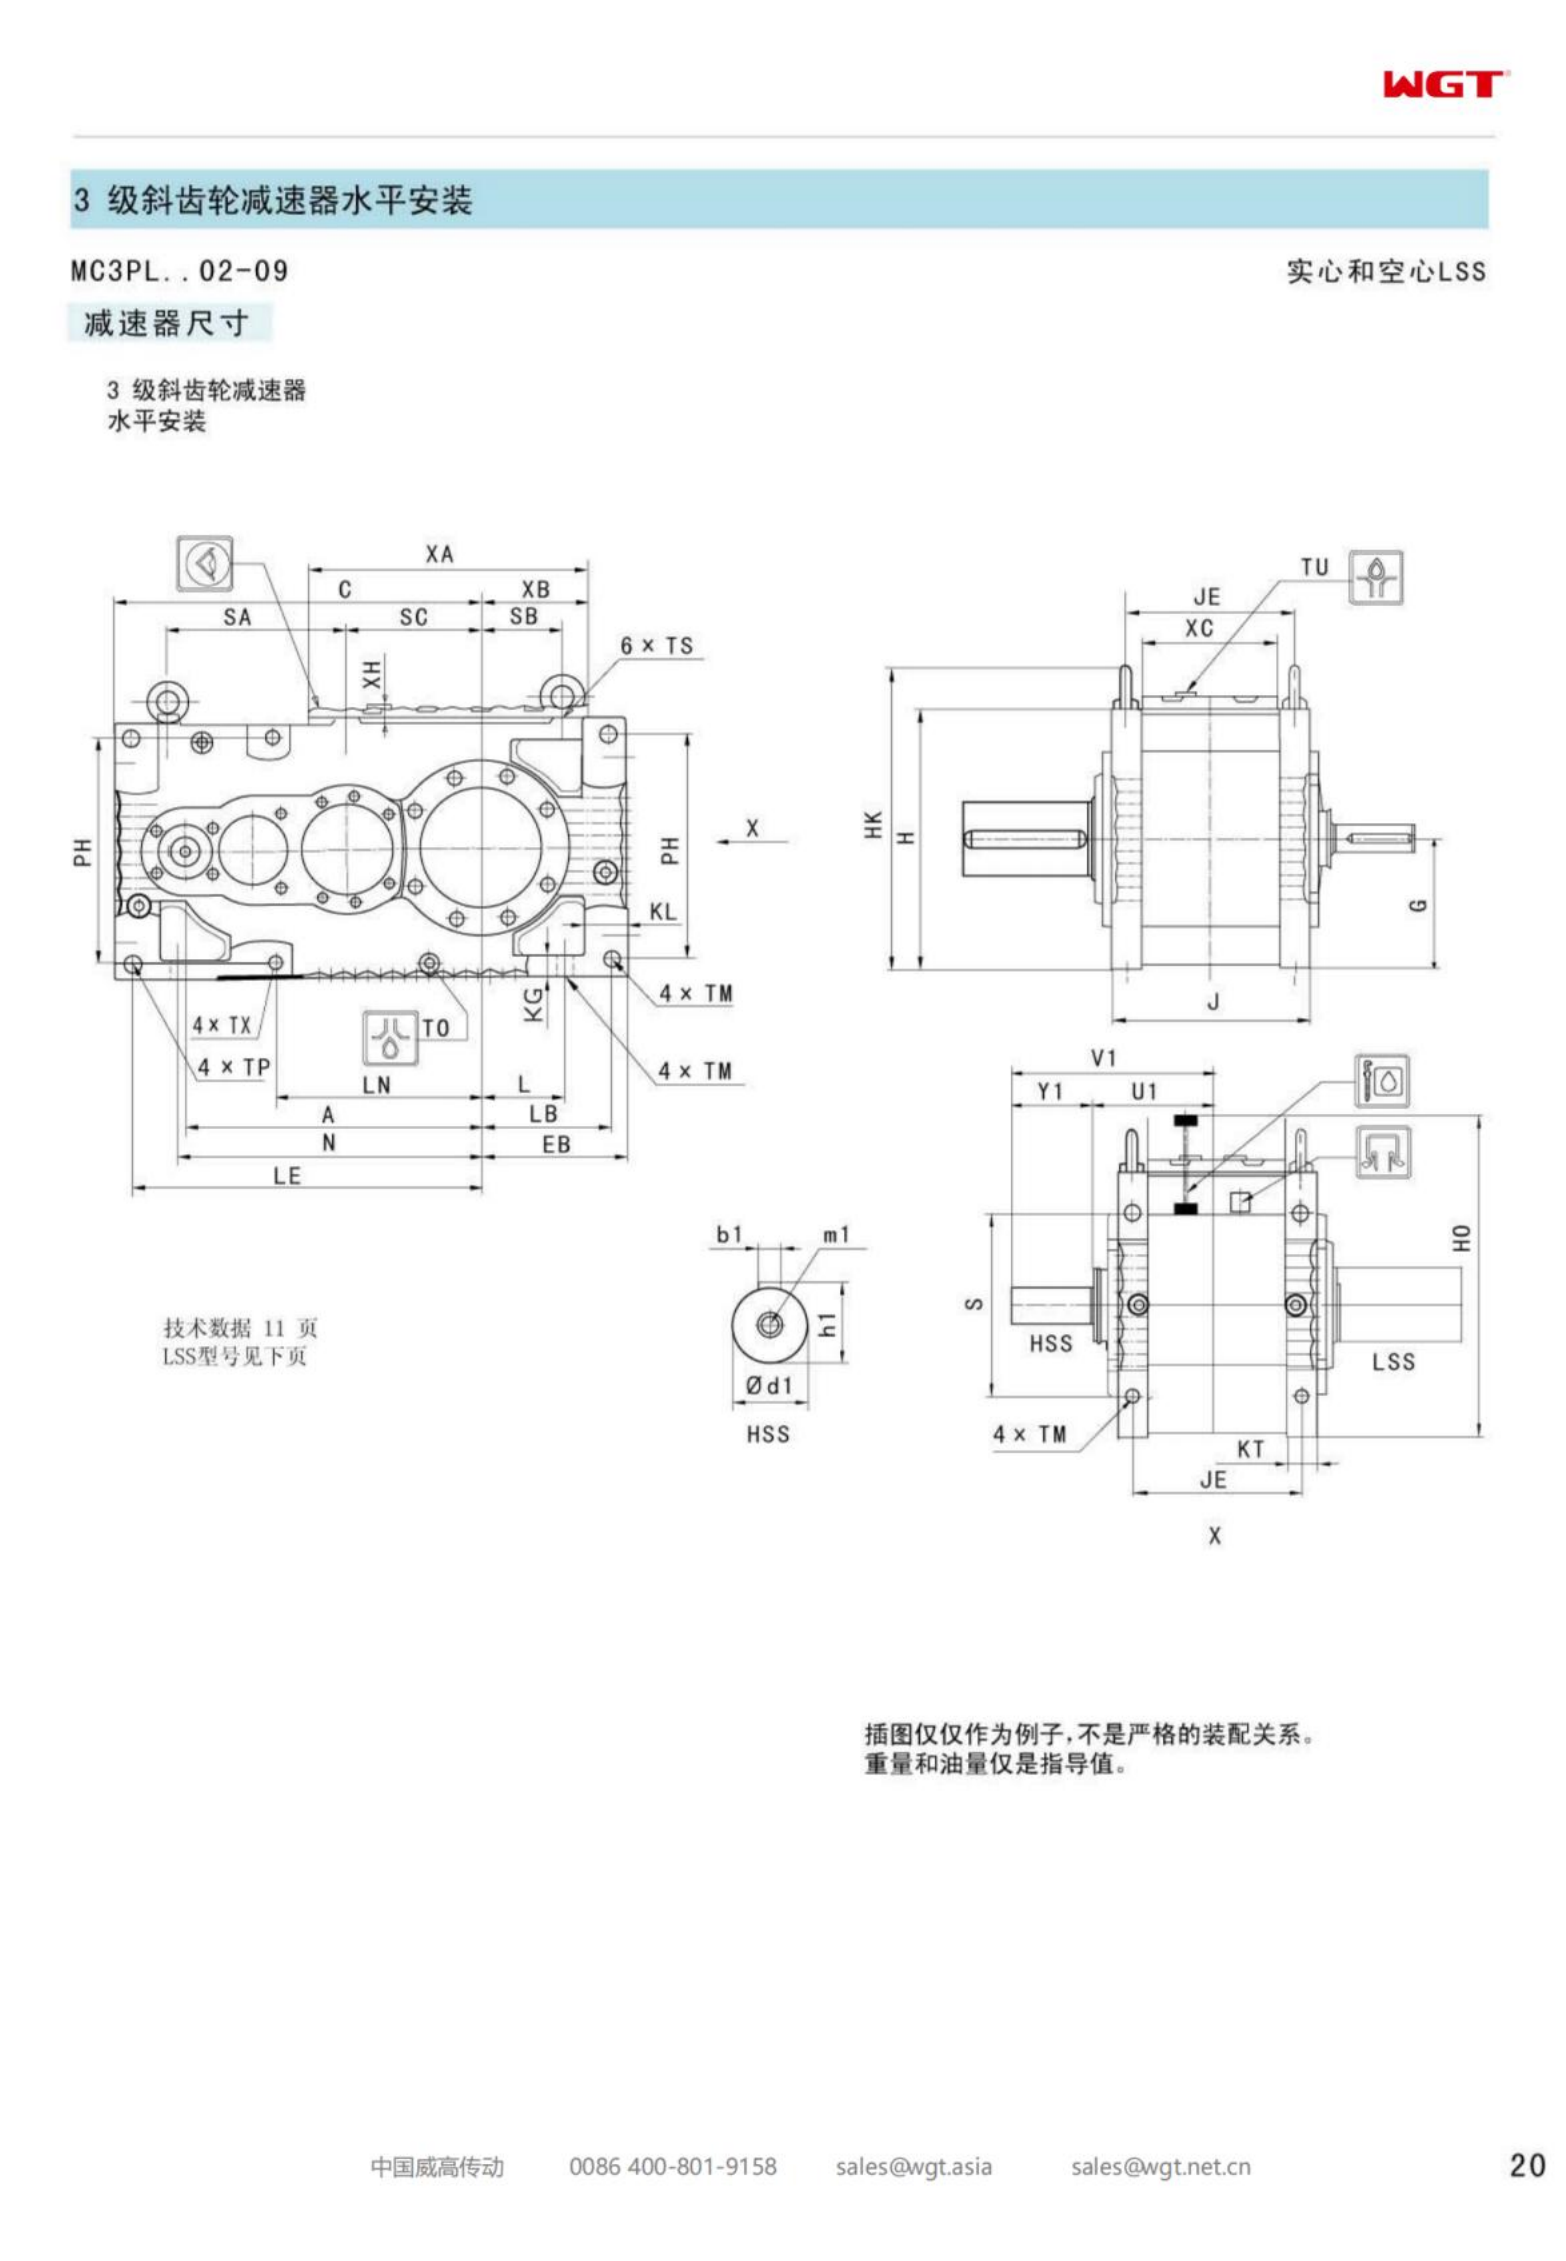 MC3PLST06 replaces _SEW_MC_Series gearbox (patent)